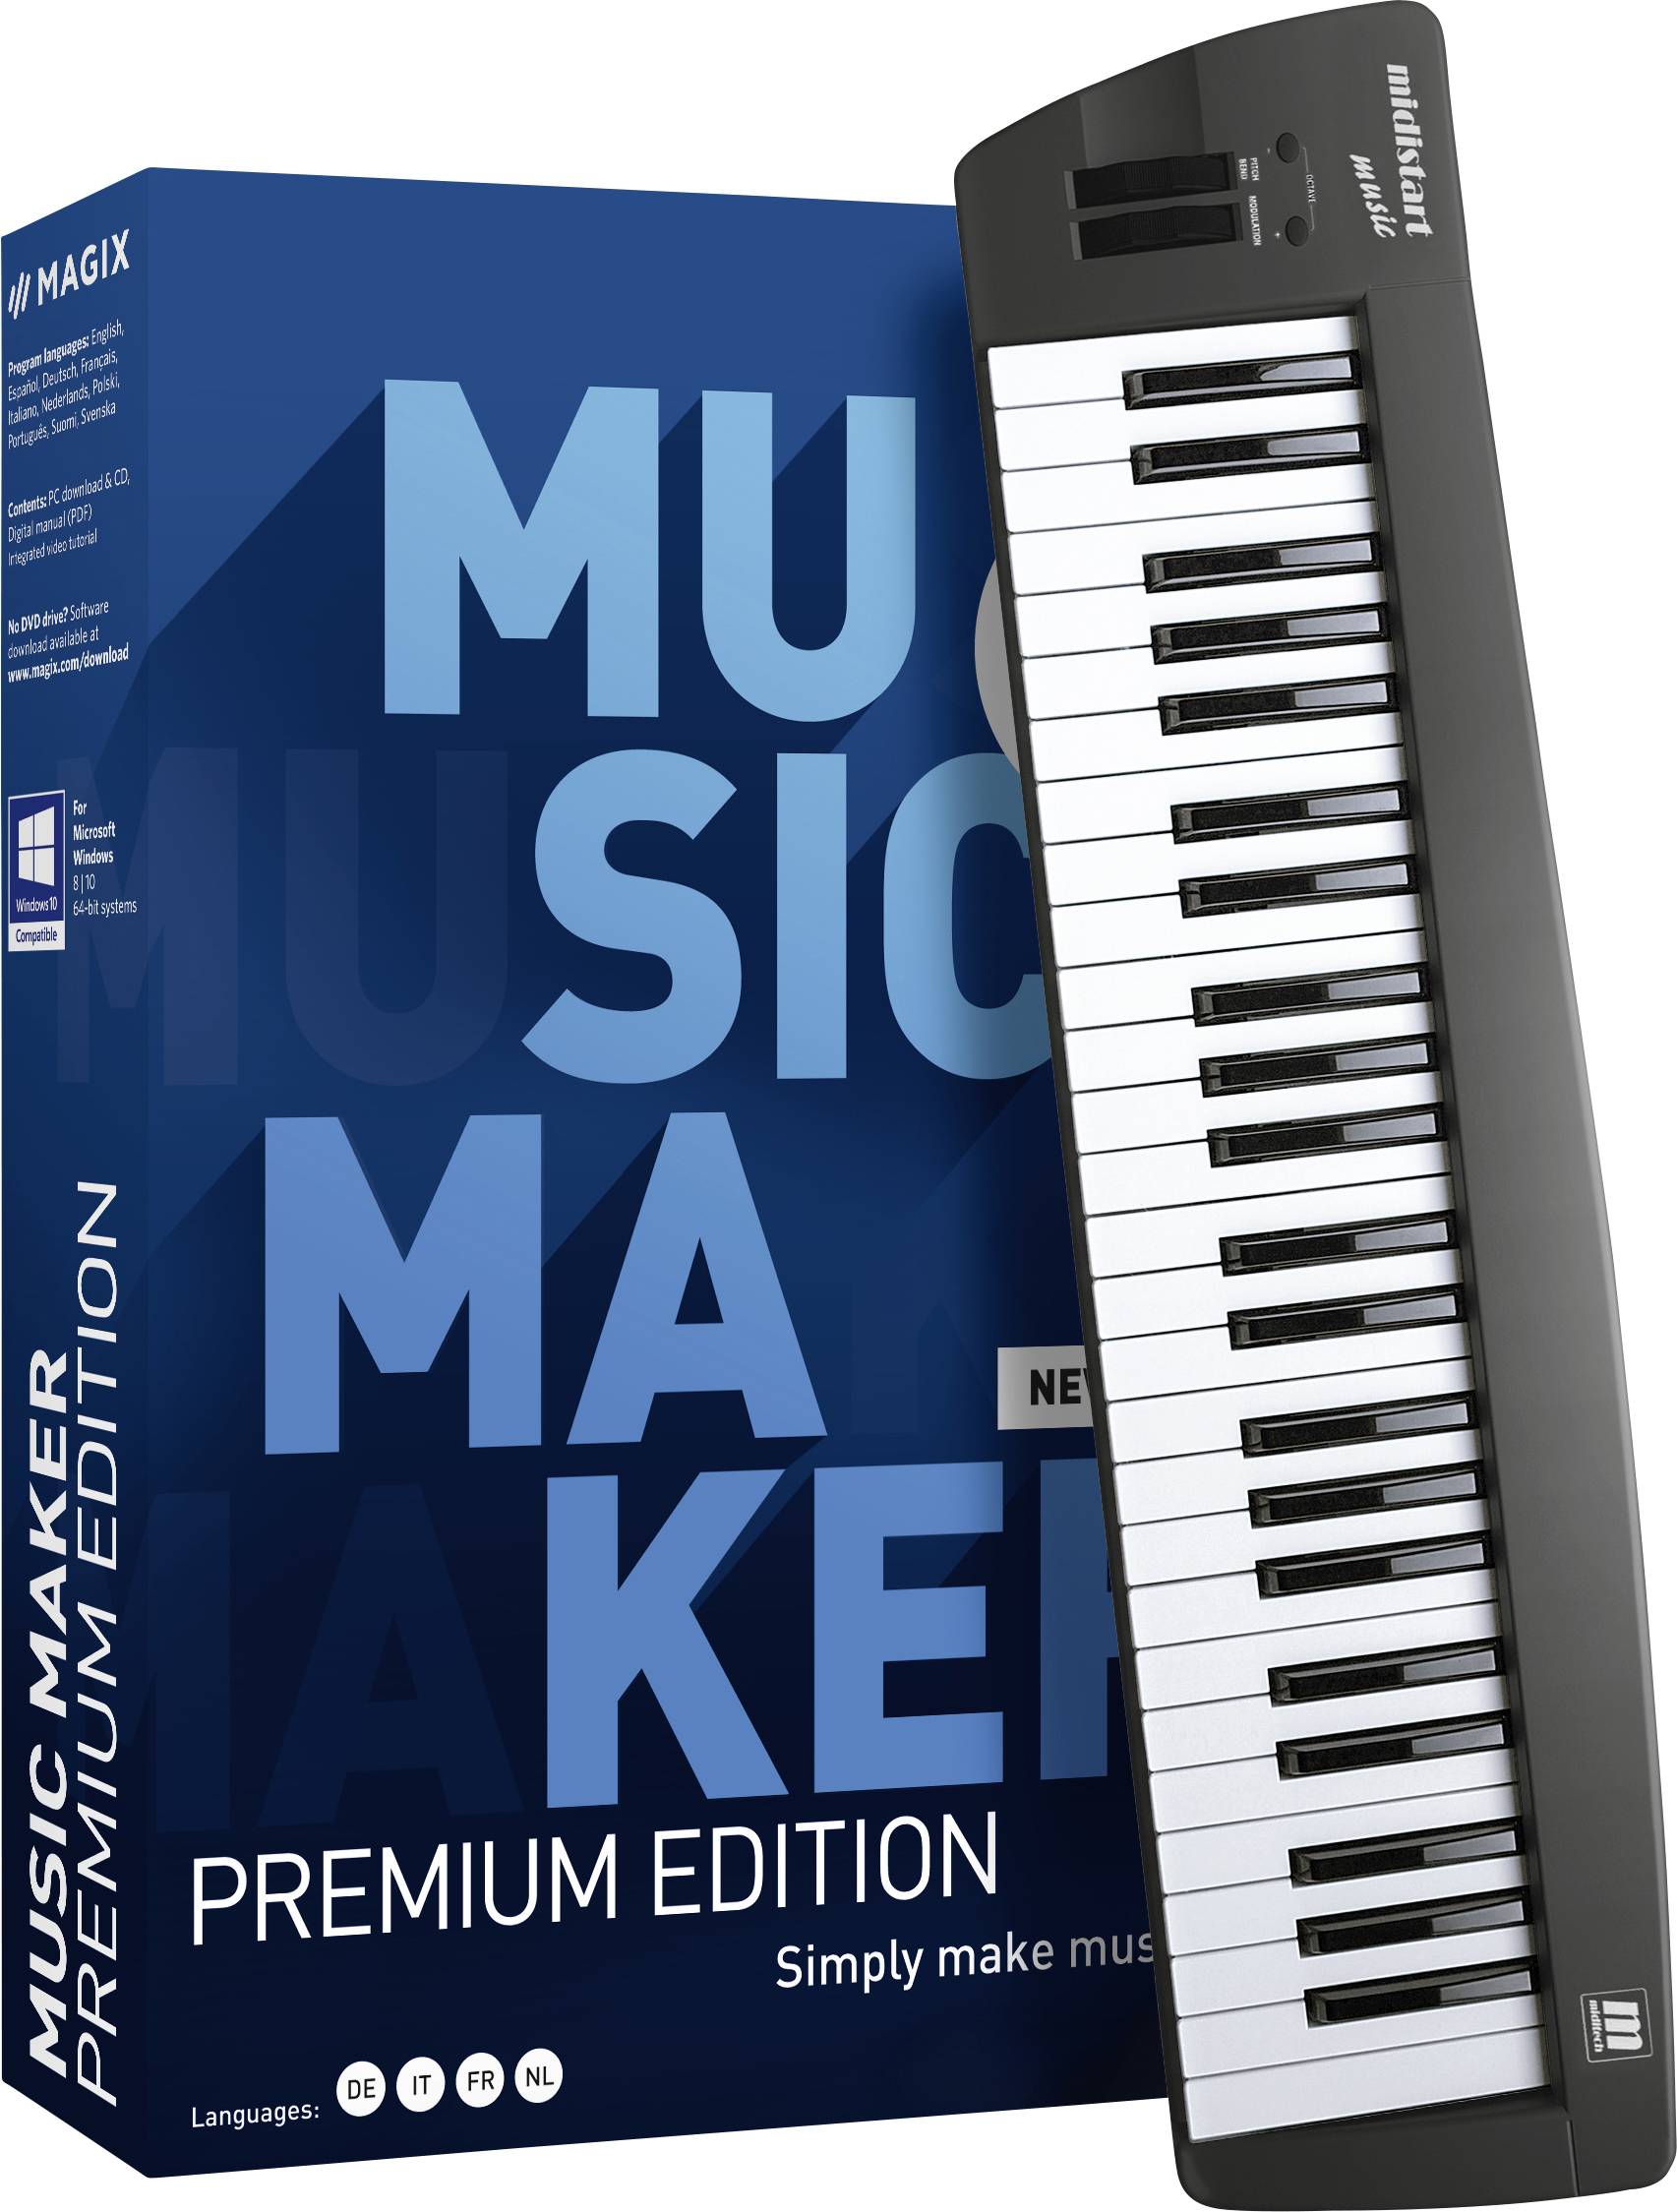 Download soundpools for magix music maker premium